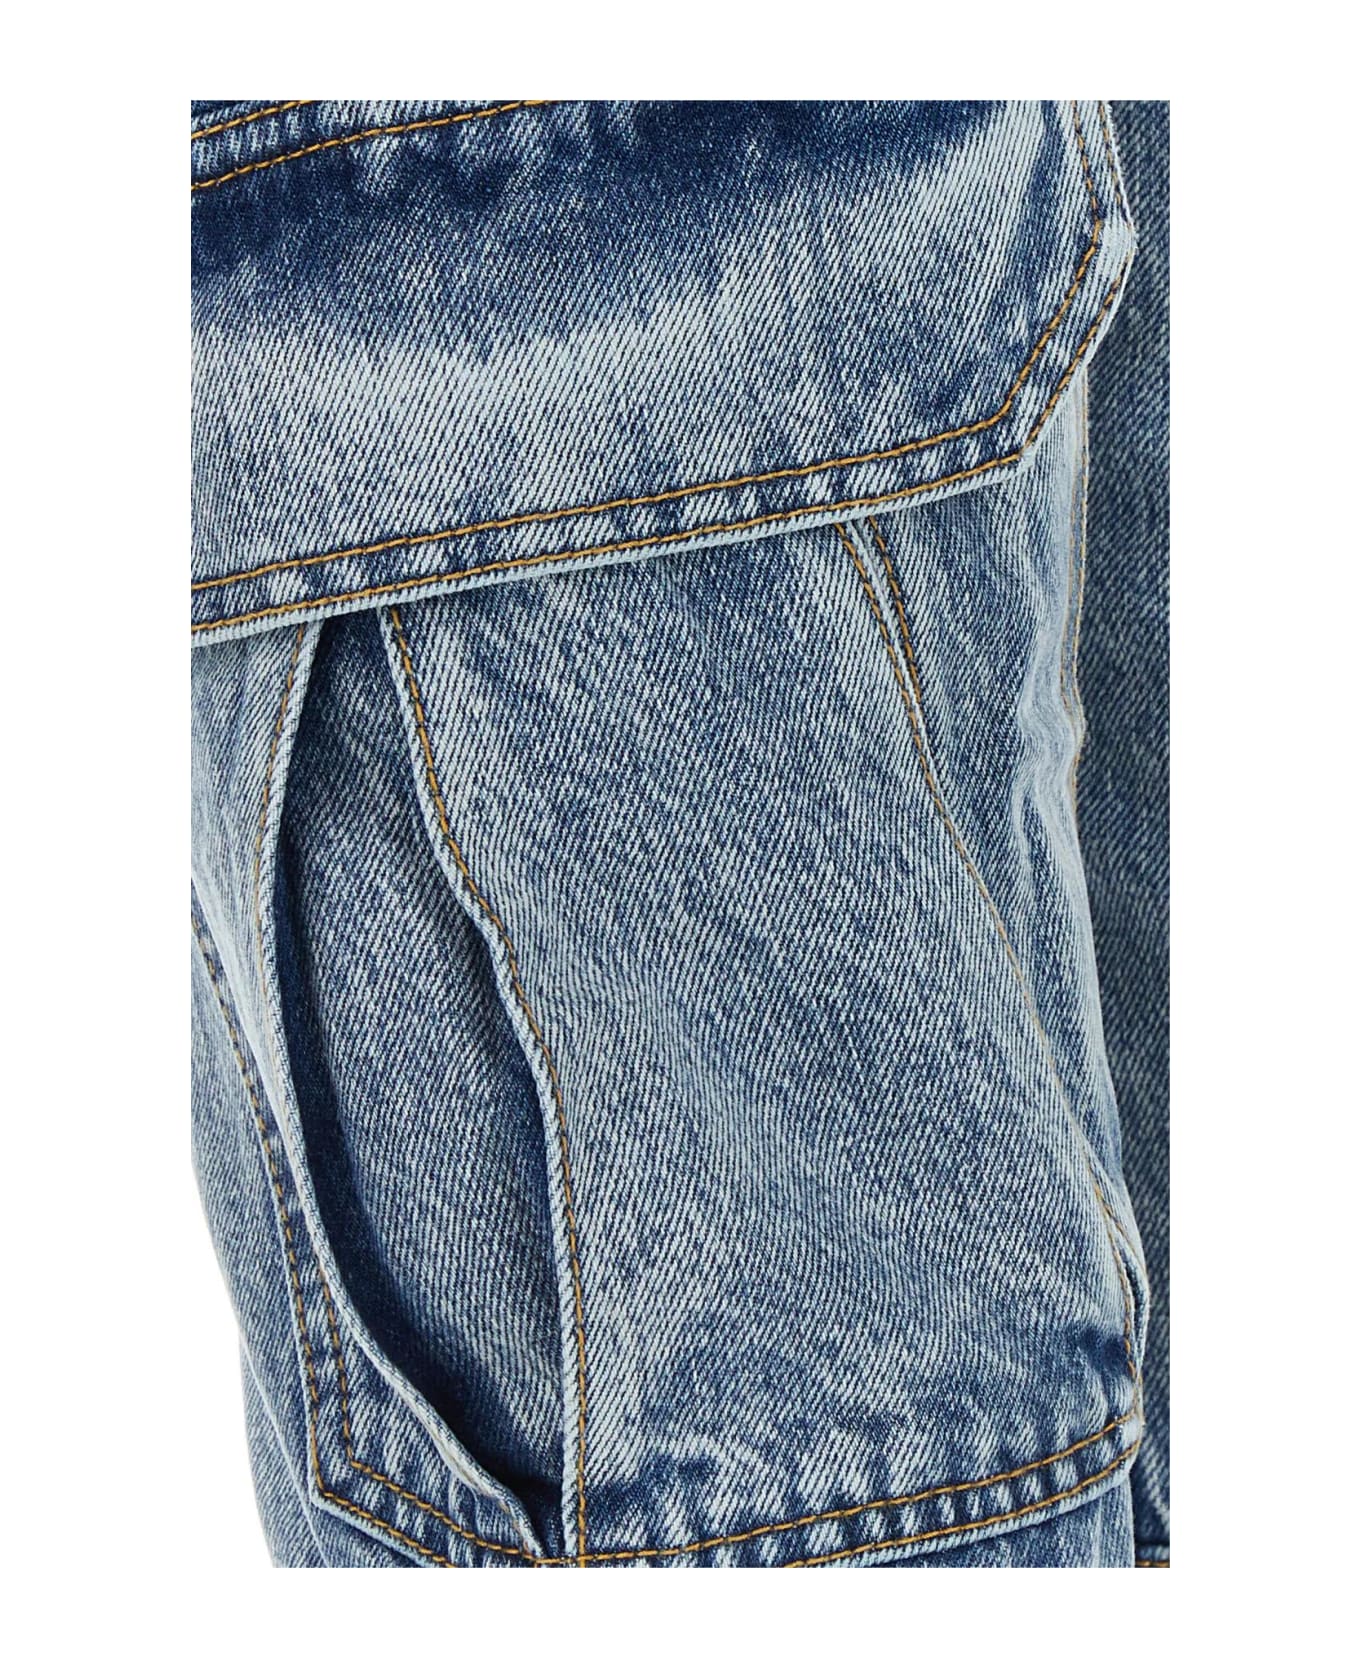 Givenchy Denim Cargo Jeans - Light Blue デニム